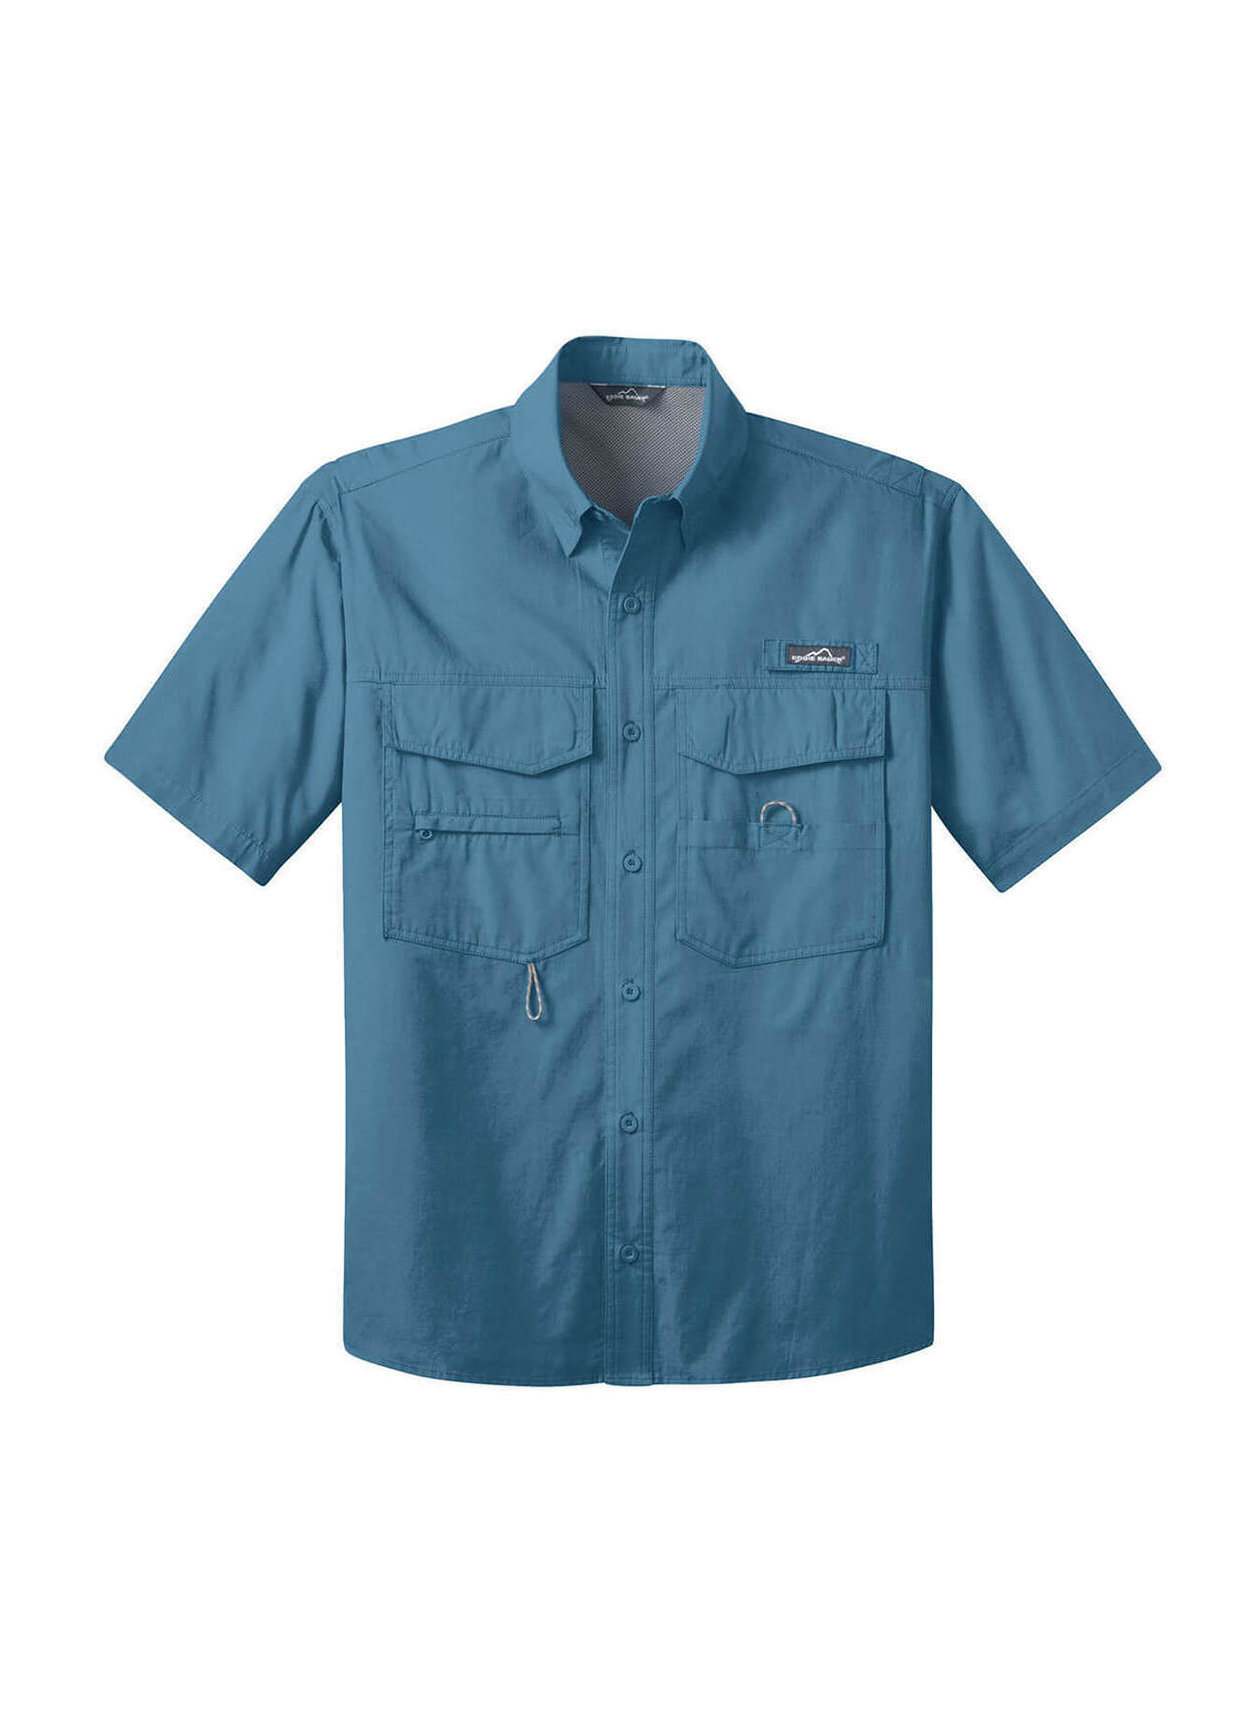 Eddie Bauer Men's Blue Gill Short-Sleeve Fishing Shirt